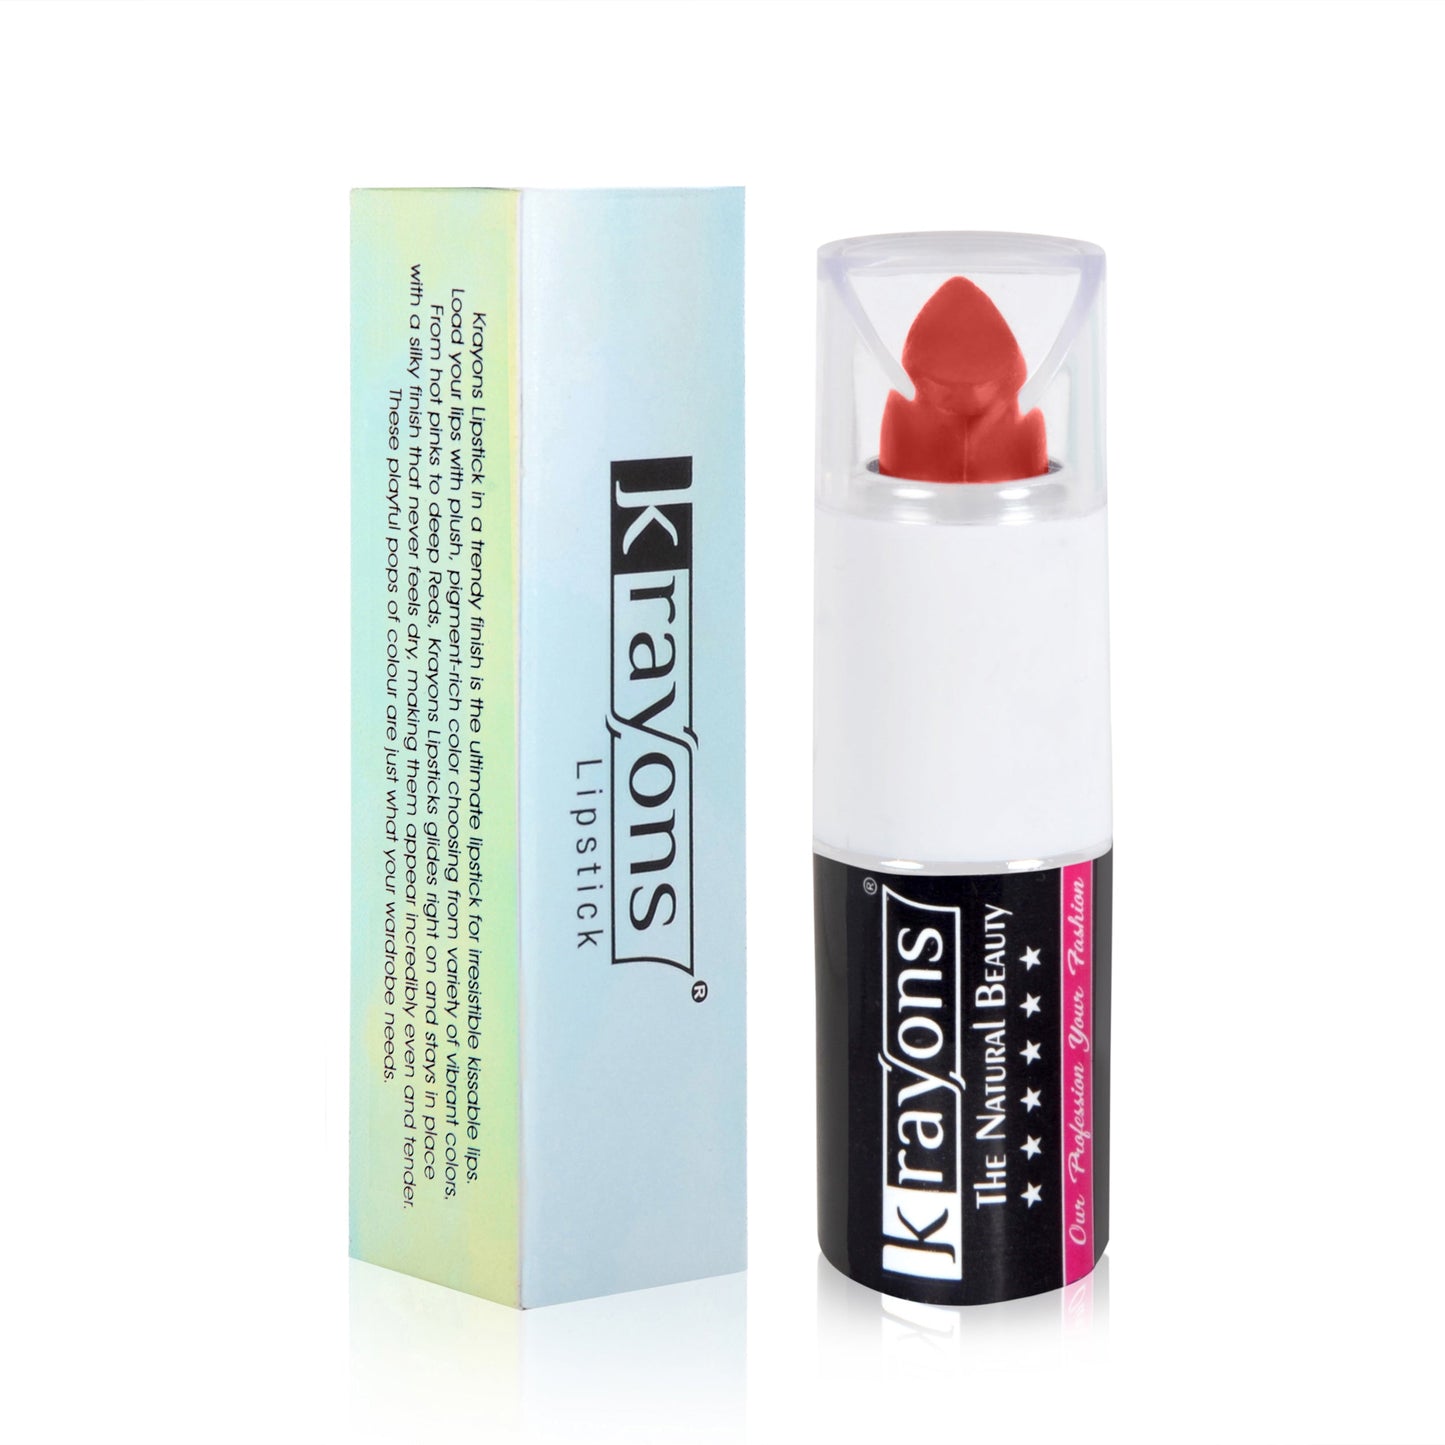 Krayons White Secret Moisturizing Matte lipstick, Waterproof, Long lasting, Coral Nude, Blush Pink, 4gm Each, Combo (Pack of 2)